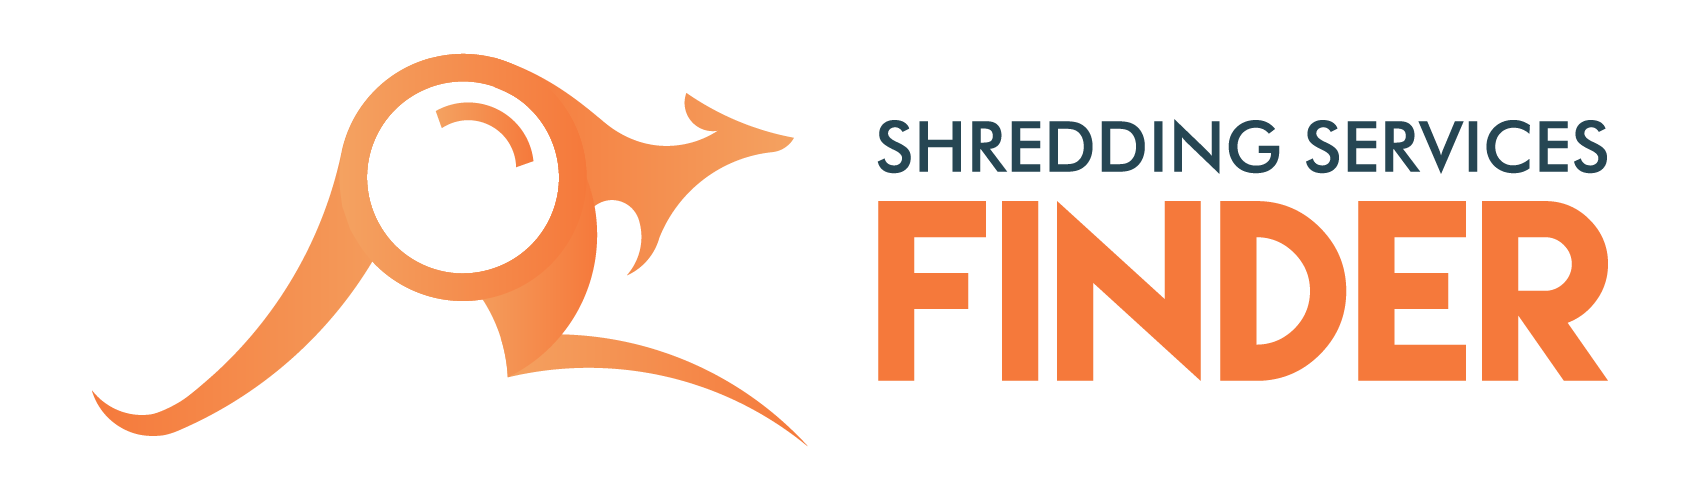 Finder shredding company